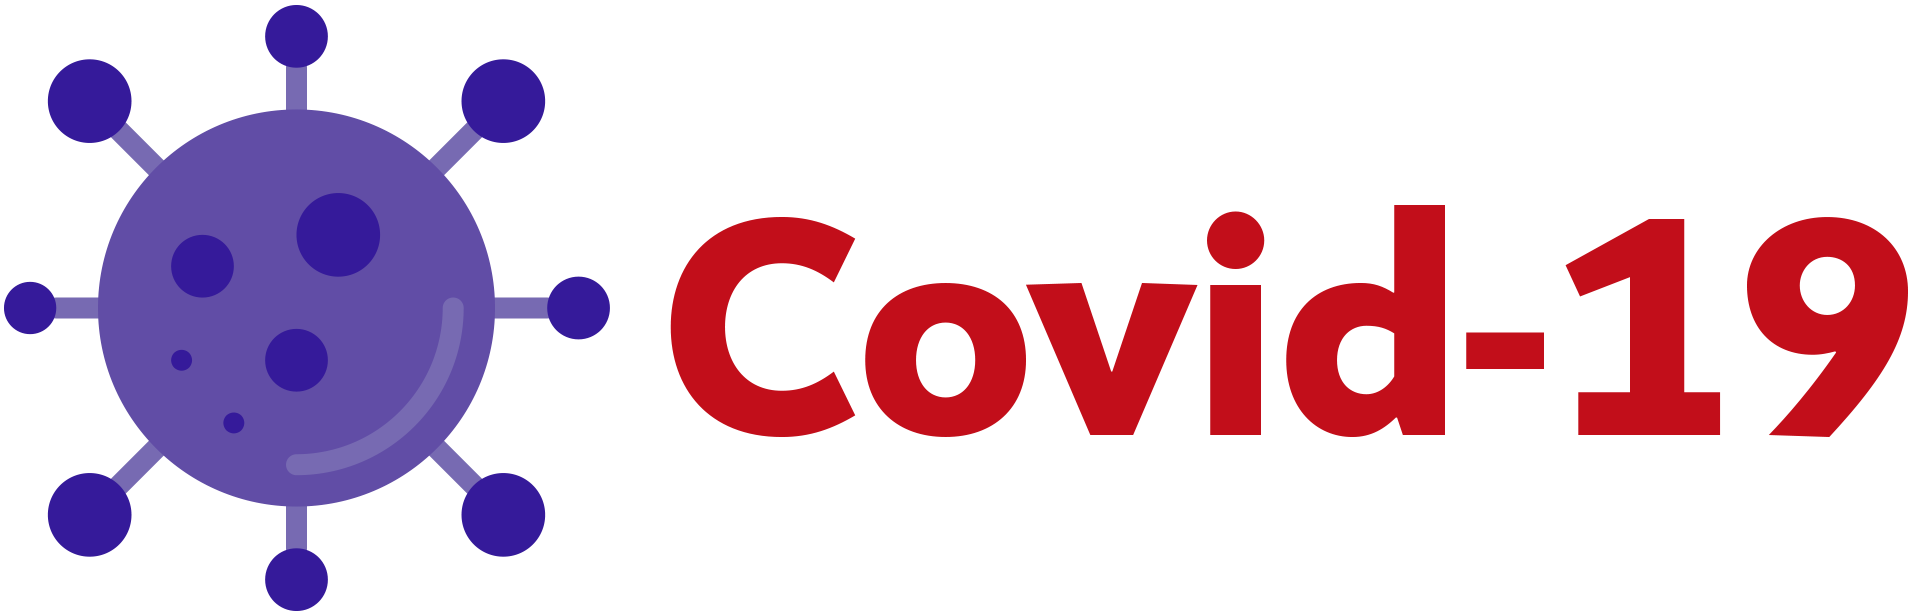 Imagem: Coronavírus